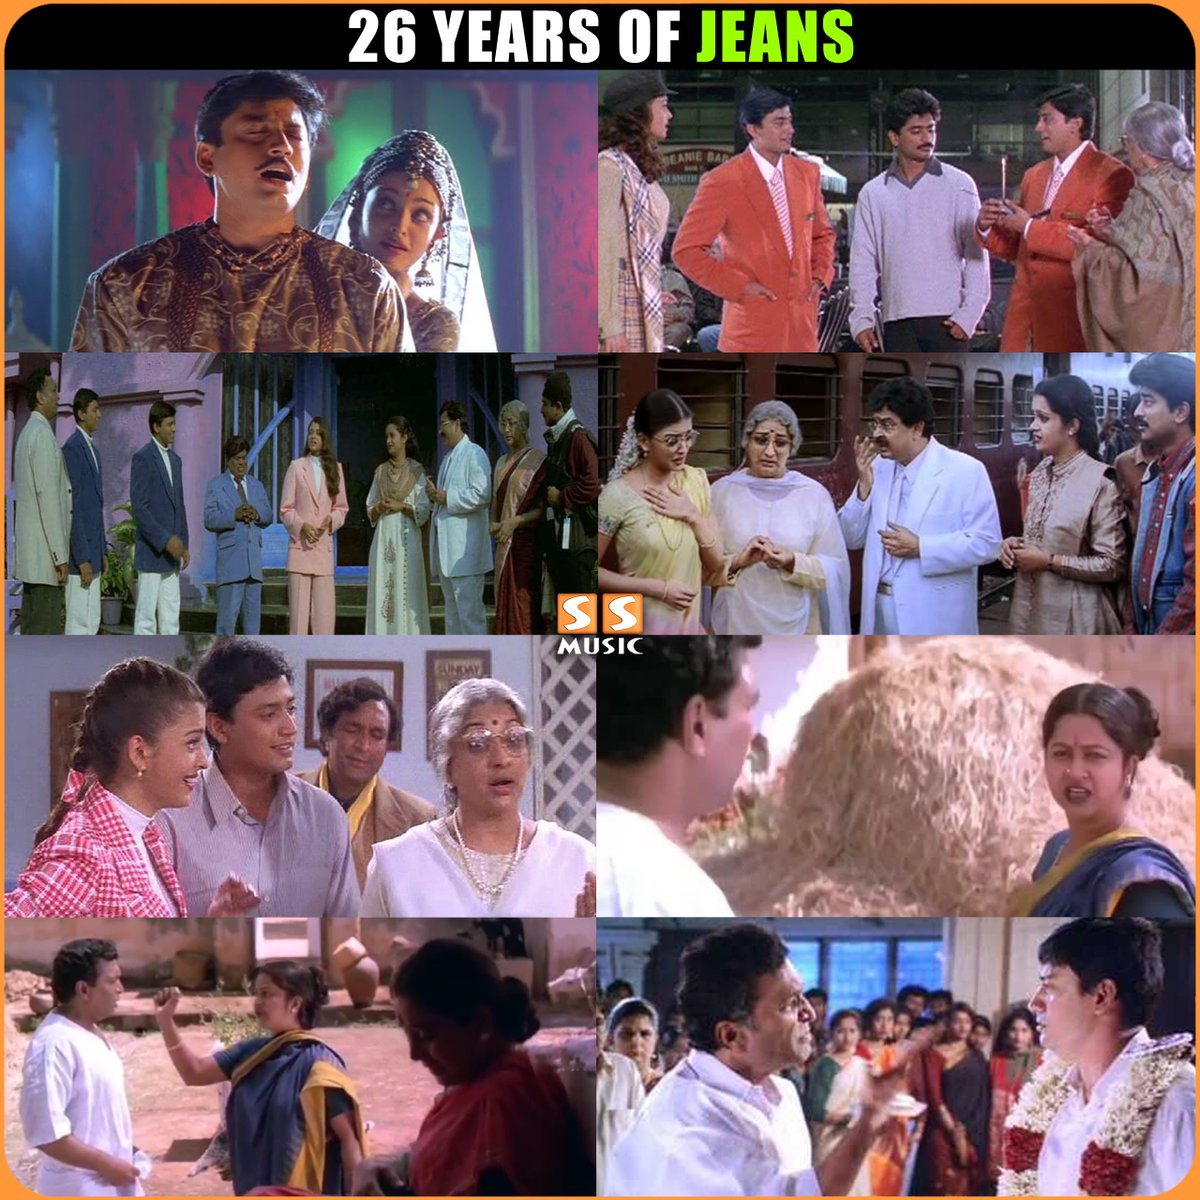 Celebrating 26 Years of Blockbuster #Jeans 😍
.
@actorprashanth #AishwaryaRai @realradikaa @shankarshanmugh @arrahman #Jeans #26YearsofJeans #JeansMovie #SSMusic